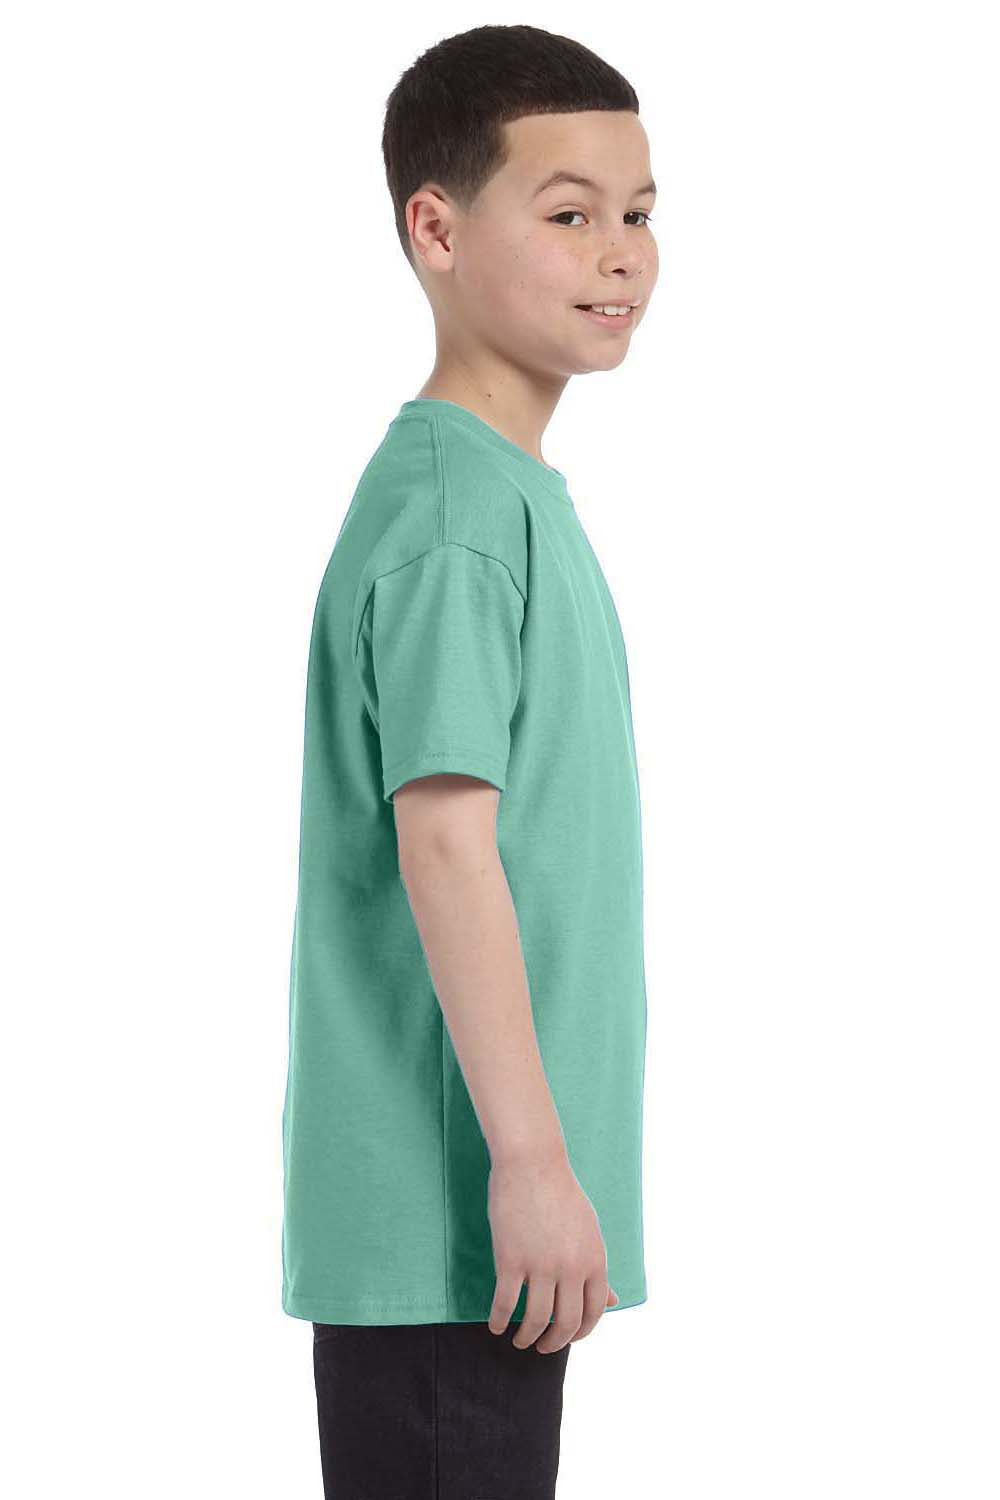 Hanes 54500 Youth ComfortSoft Short Sleeve Crewneck T-Shirt Mint Green Side